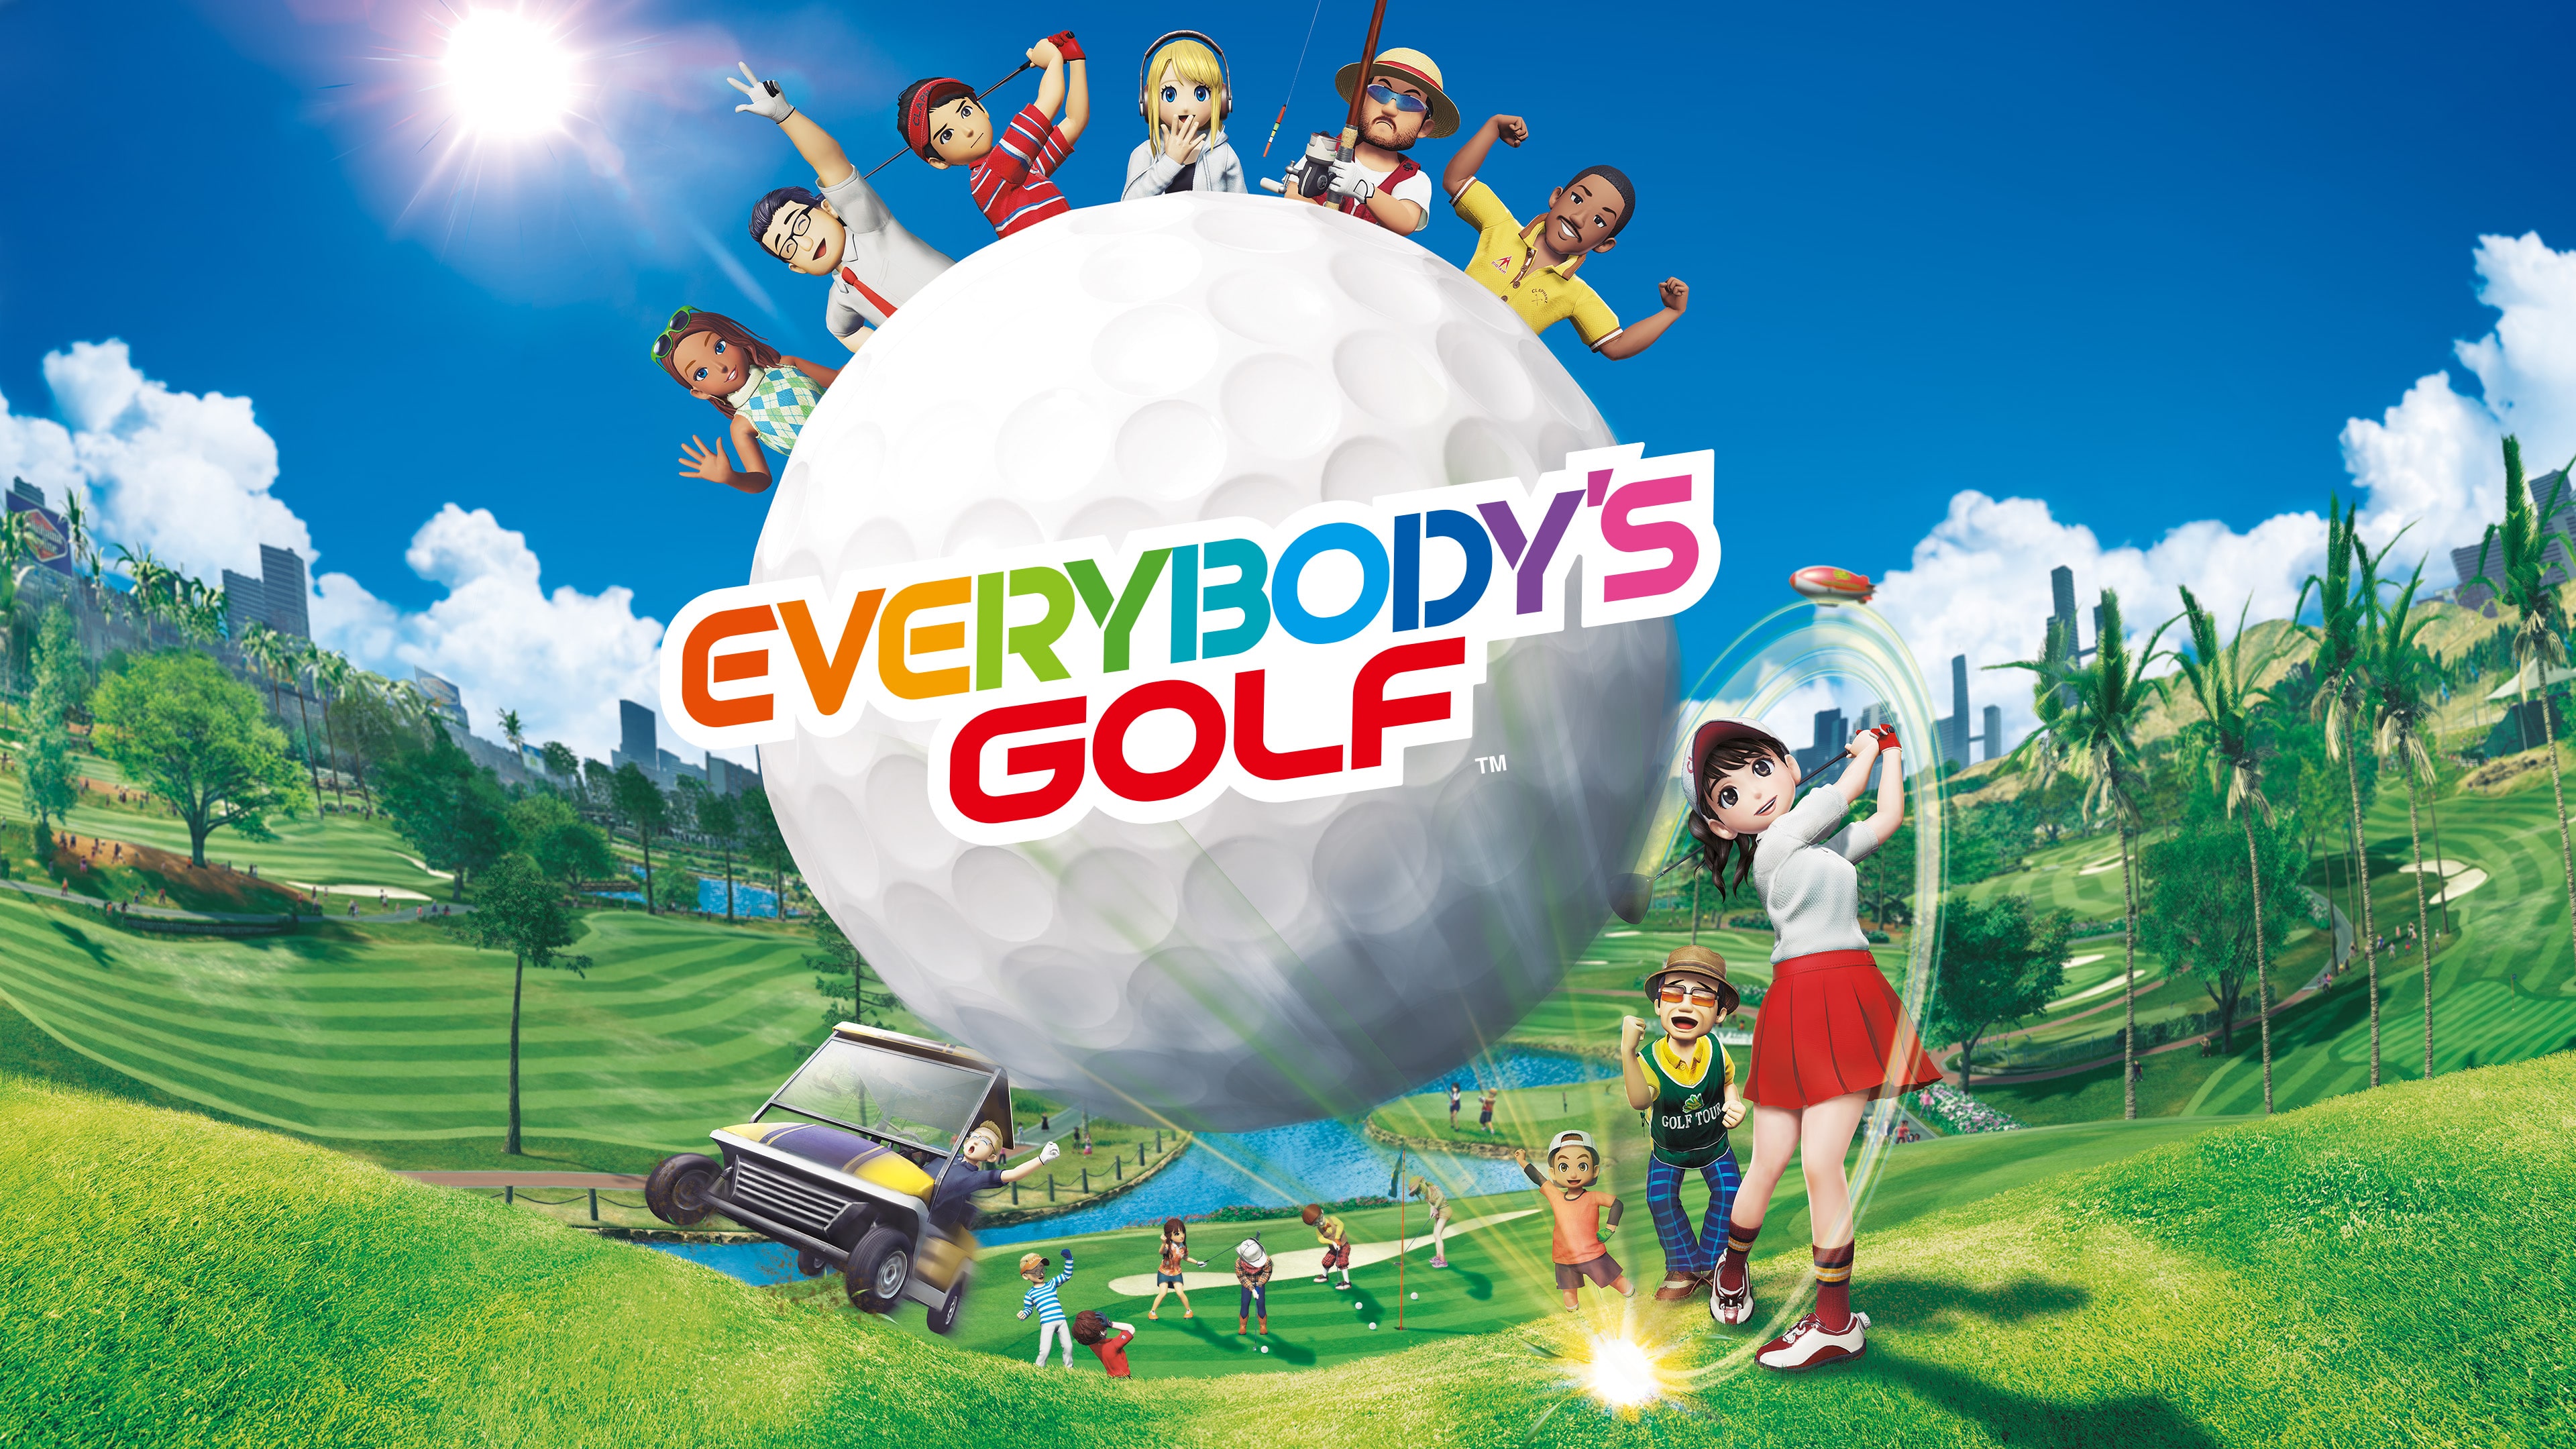 Everybody's Golf (English, Korean, Traditional Chinese)